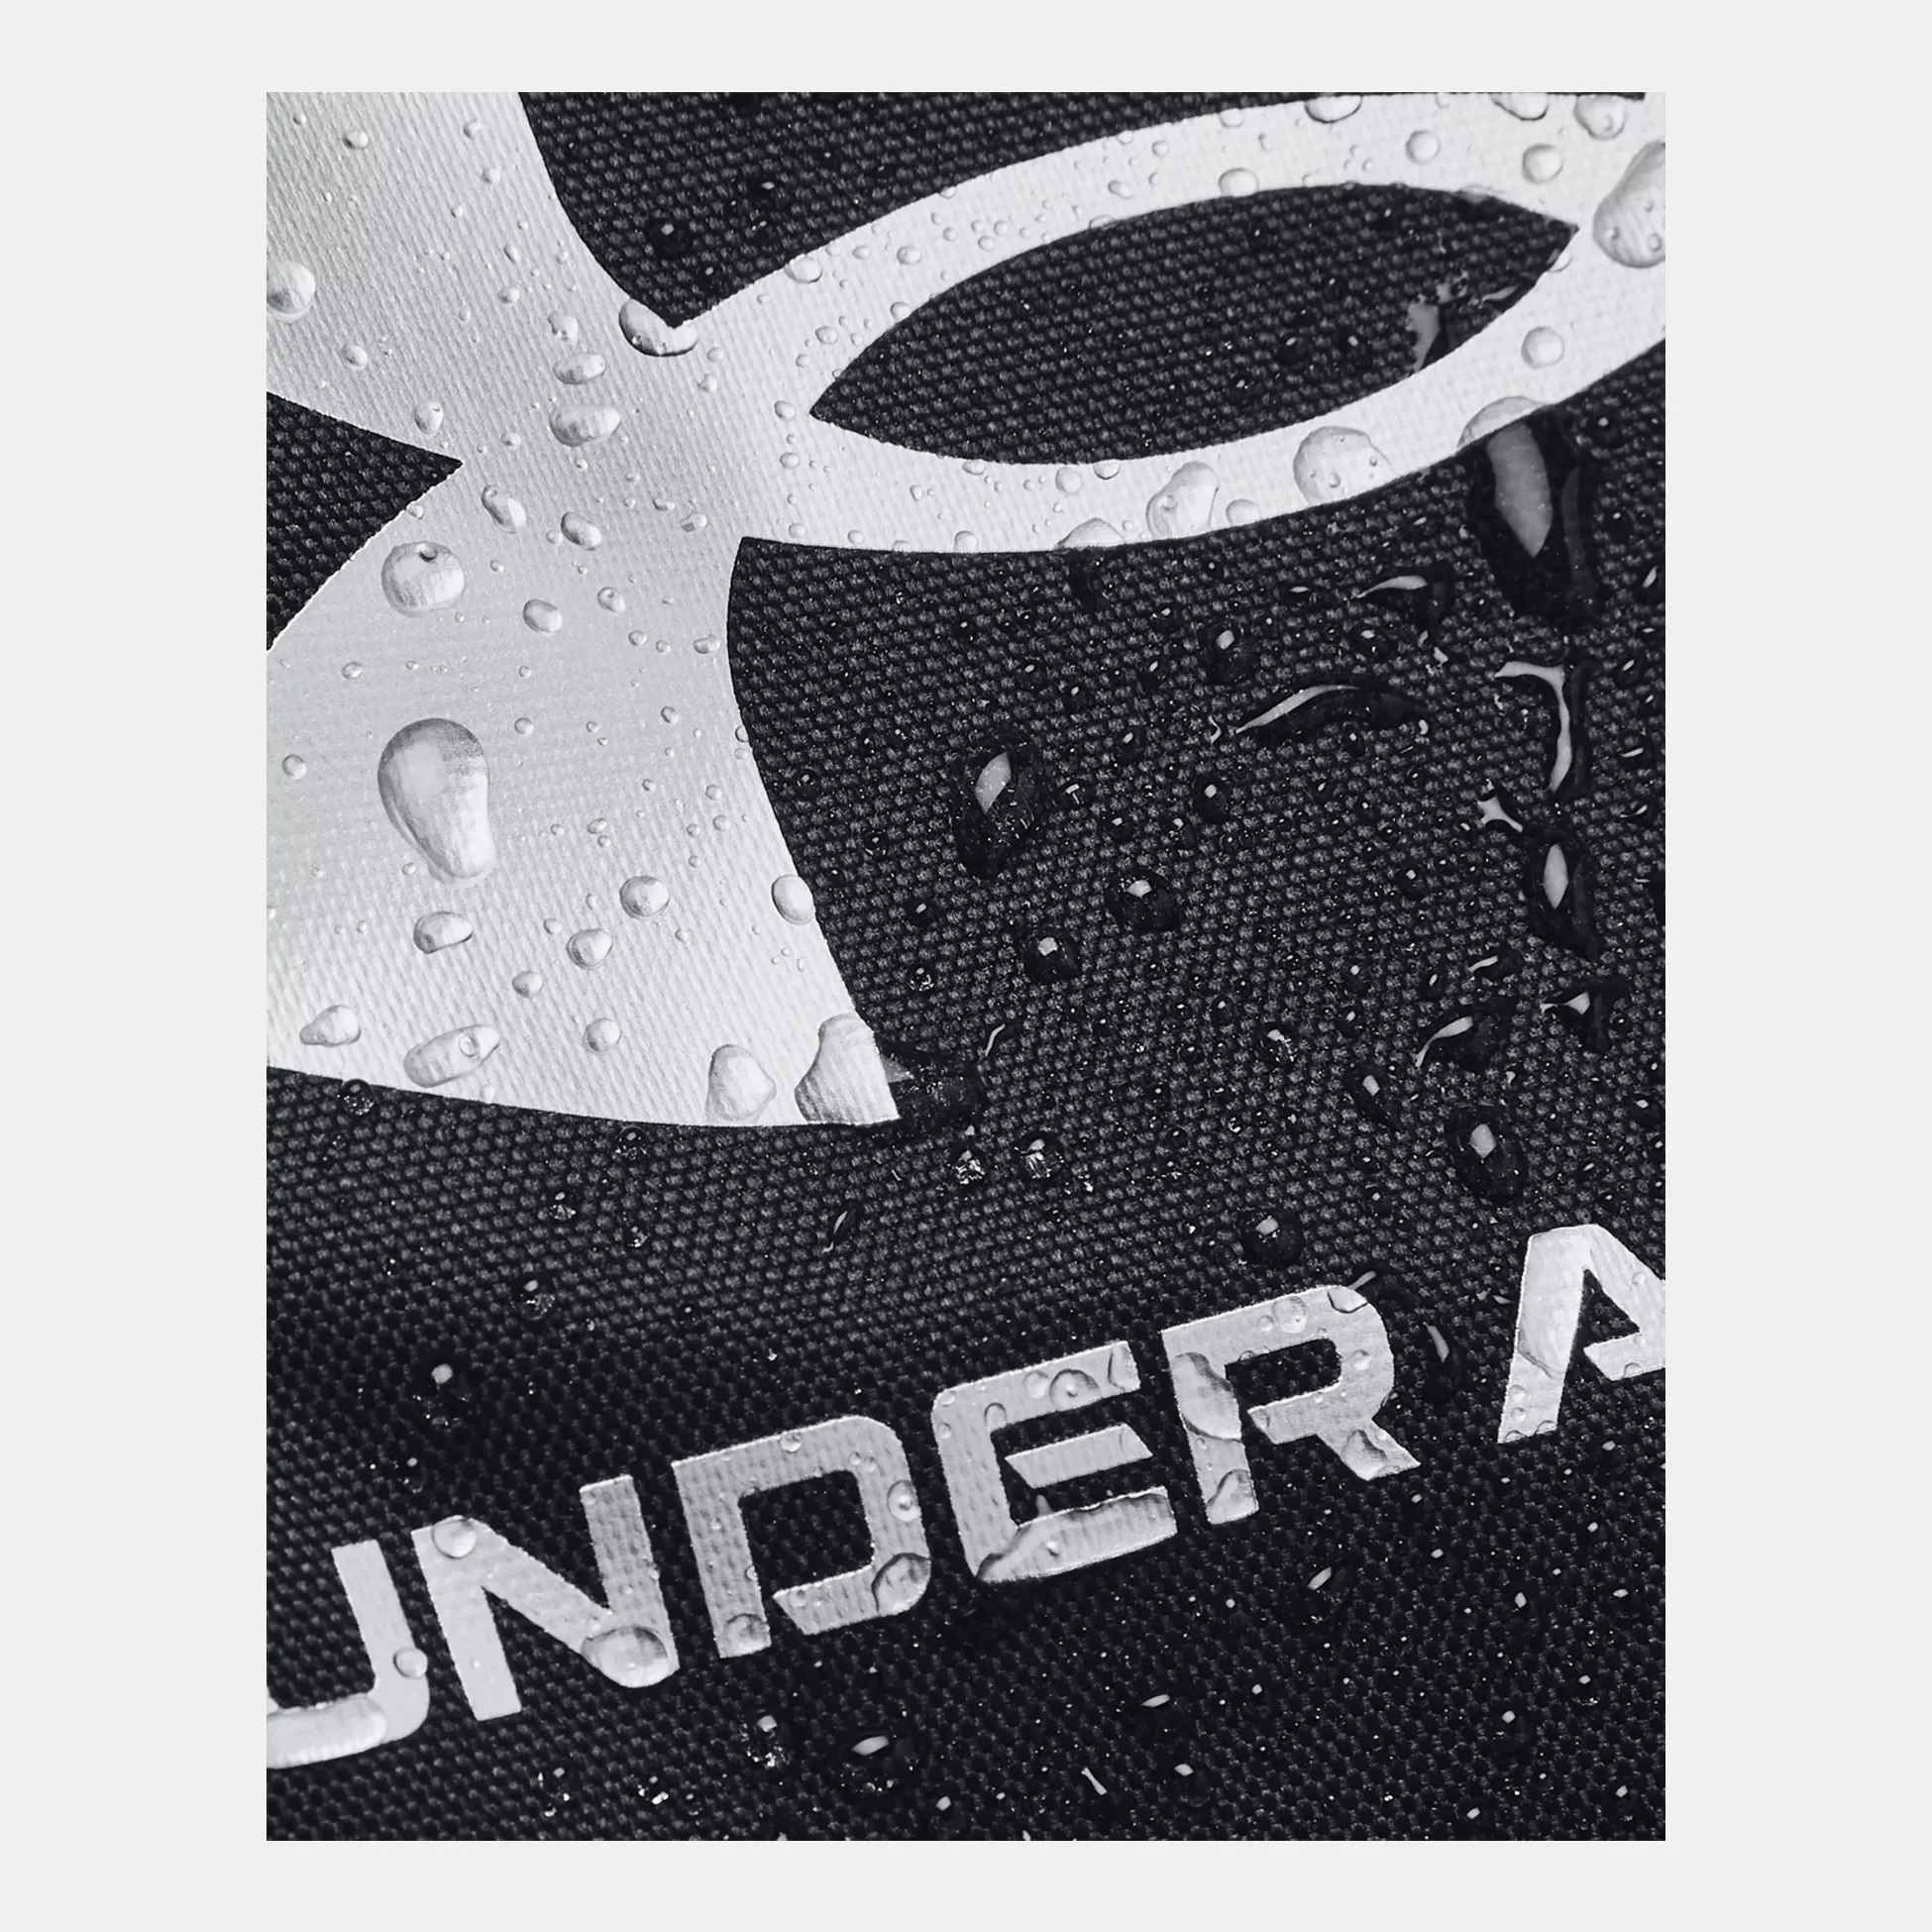 Rucsaci -  under armour UA Undeniable 5.0 SM Duffle Bag